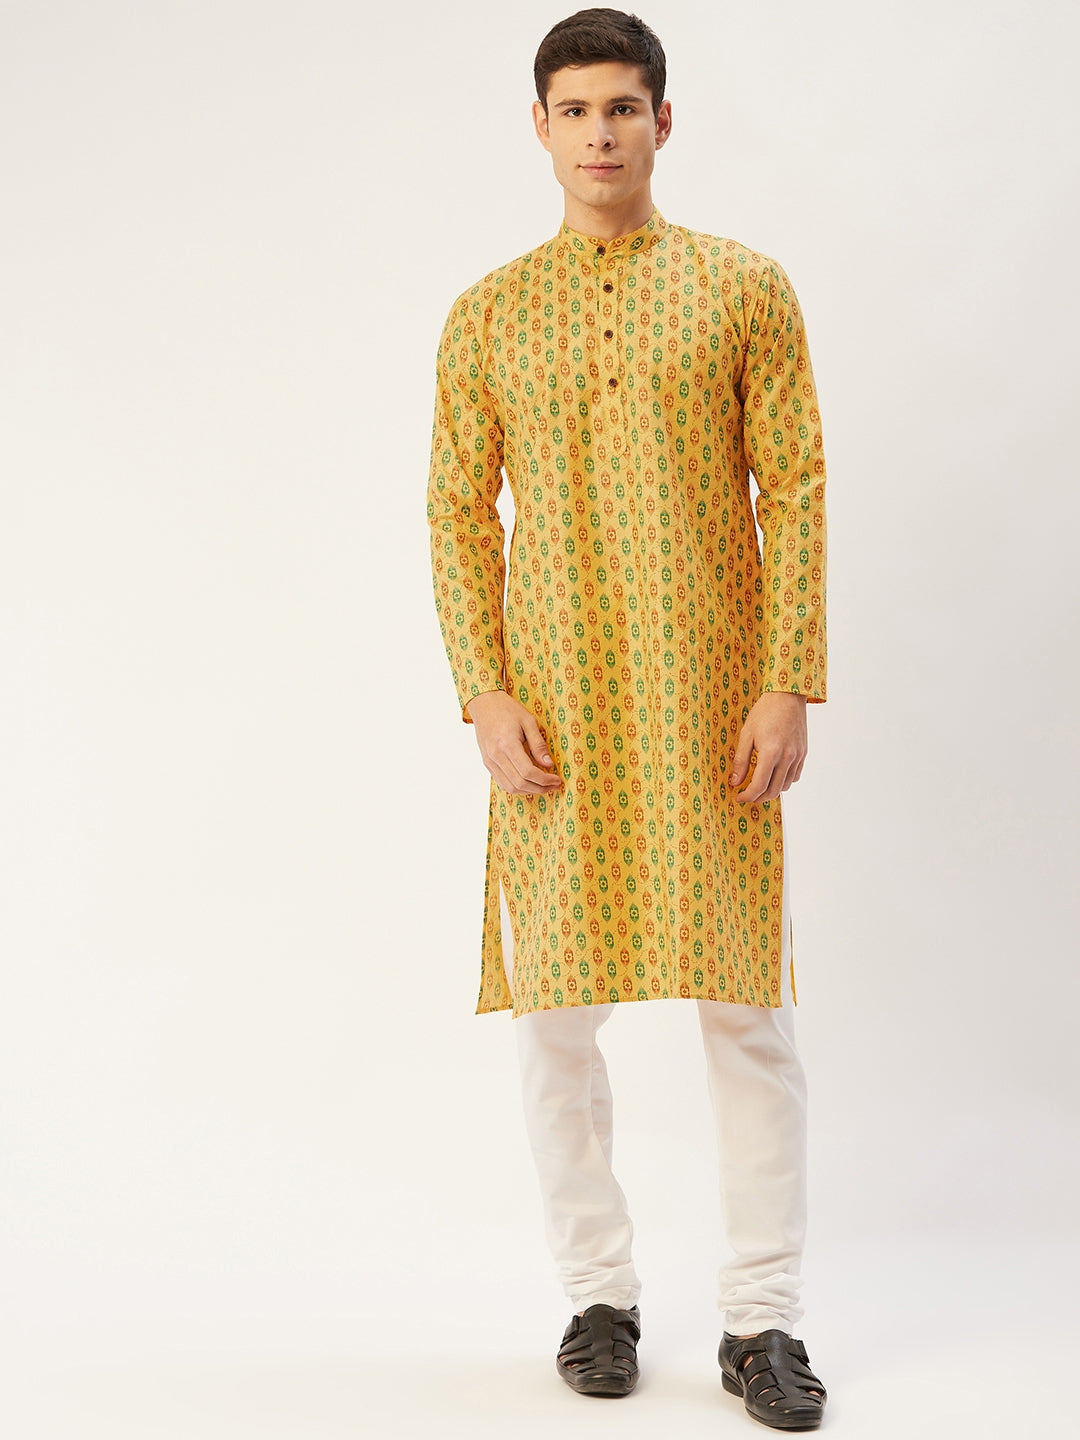 Jompers Men's Mustard Cotton Ikat printed kurta Pyjama Set